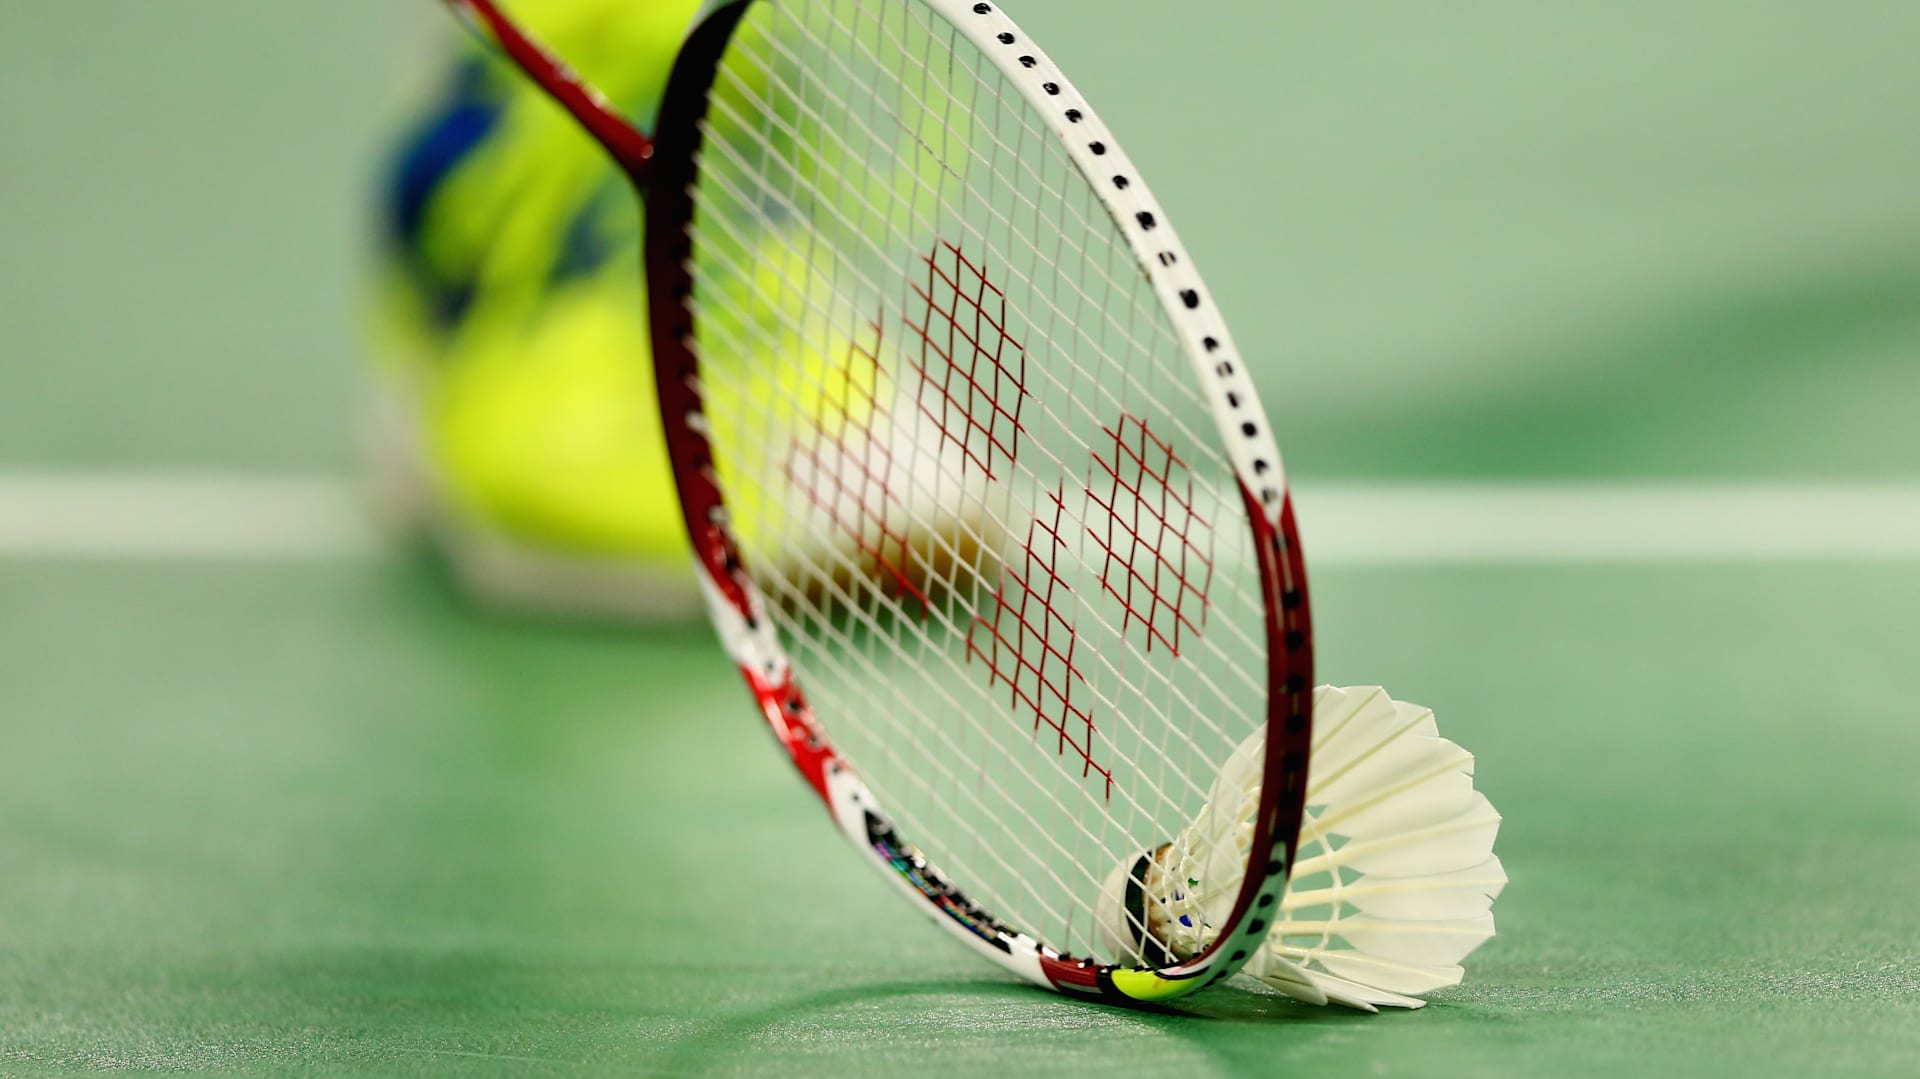 Desktop Hand-cranked Racket Stringing Machine Tennis Badminton Dual-purpose  Tool